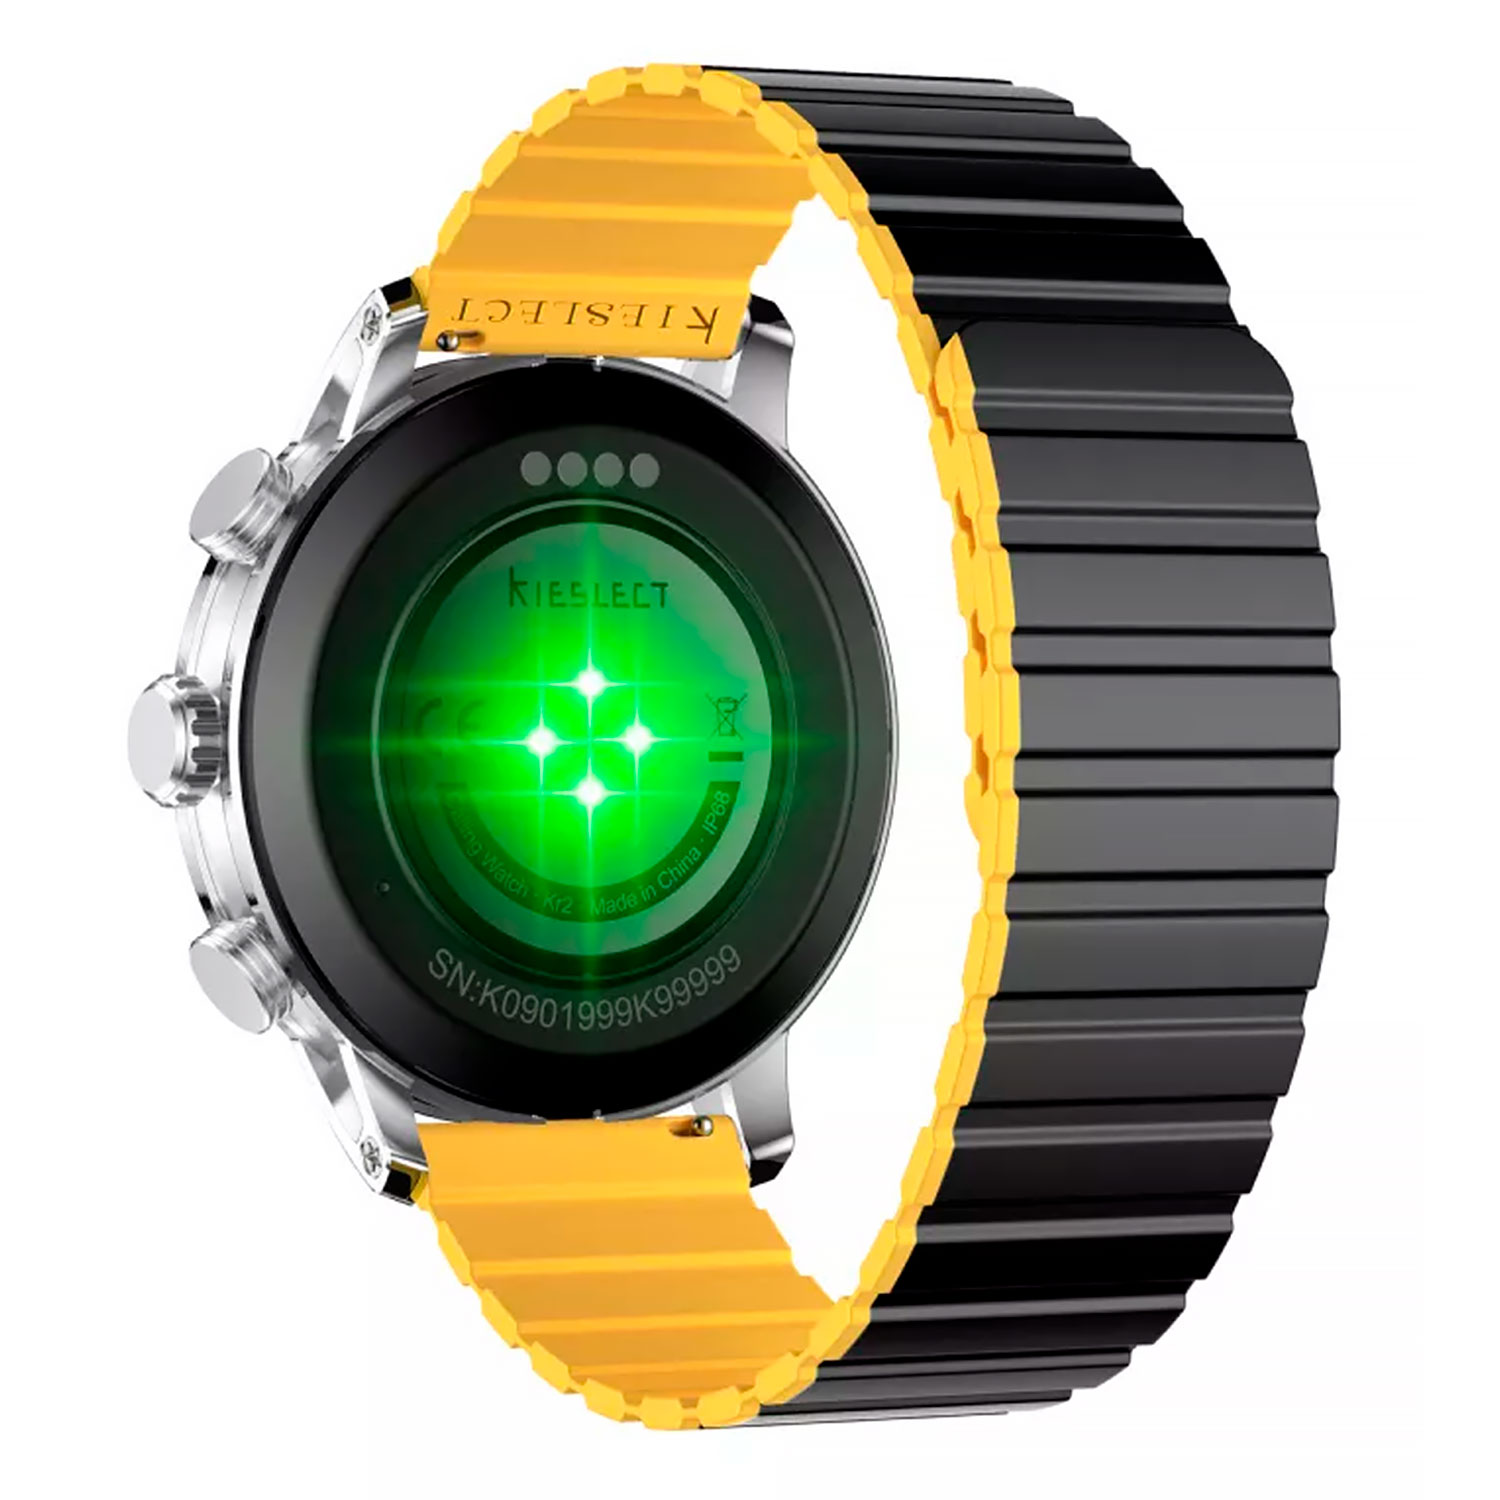 Smartwatch Kieslect Calling KR2 - Preto Amarelo